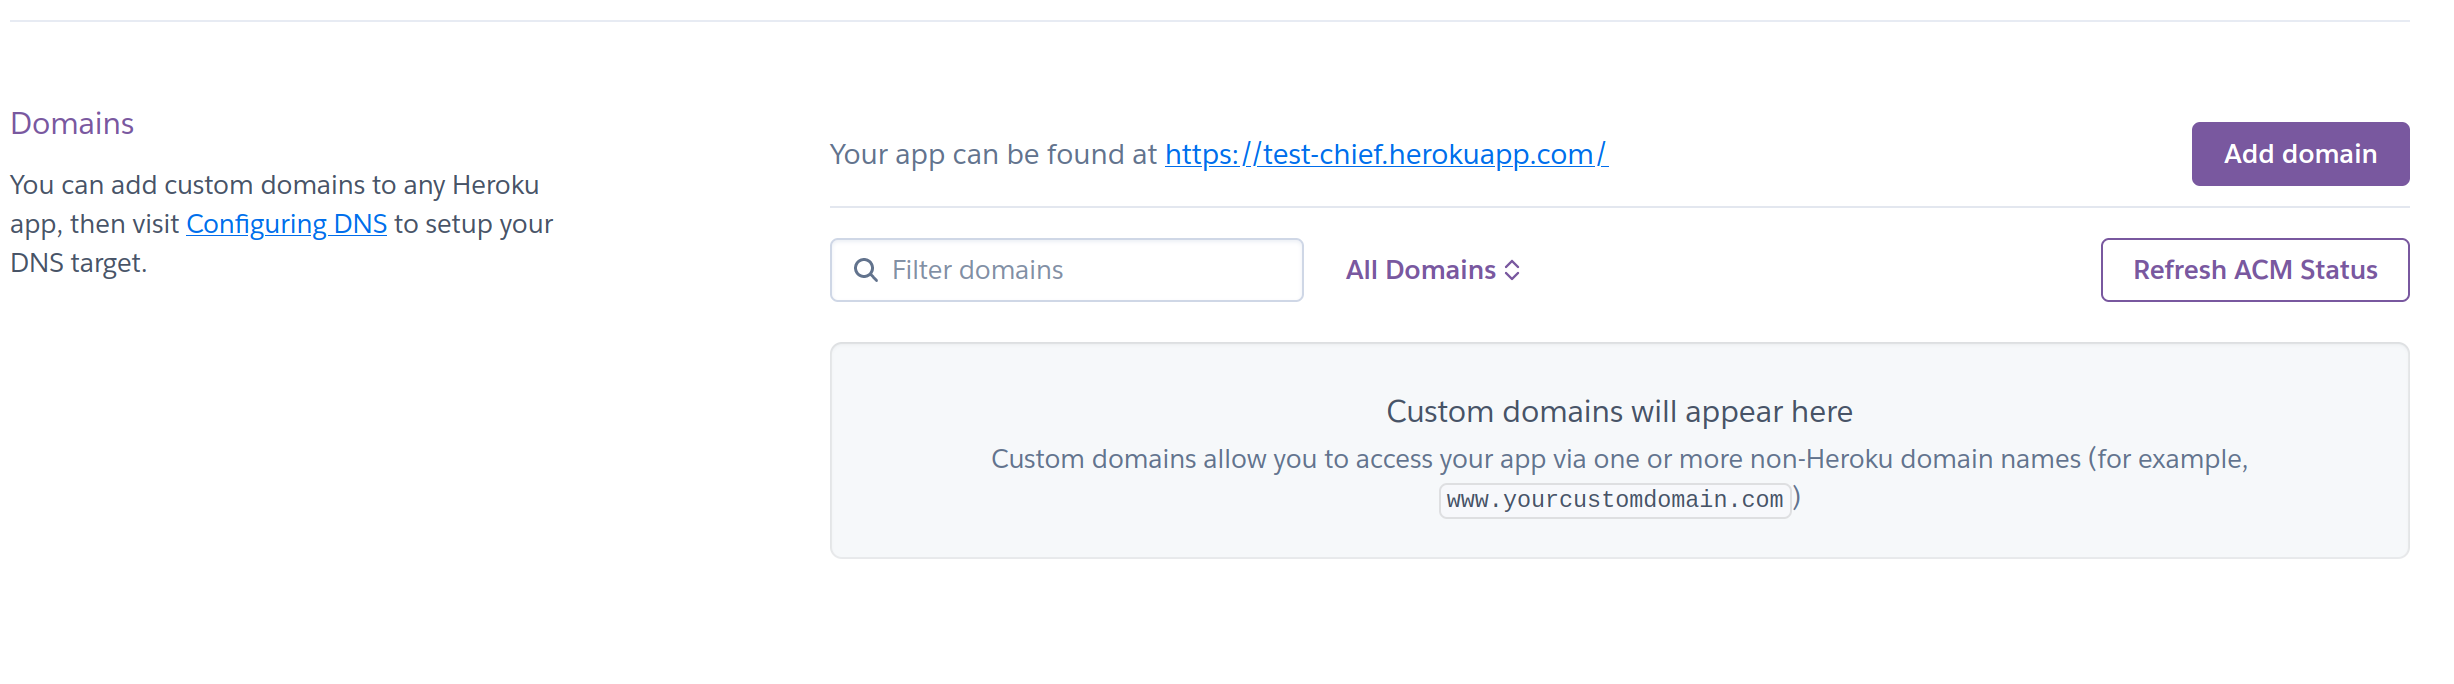 heroku settings domain